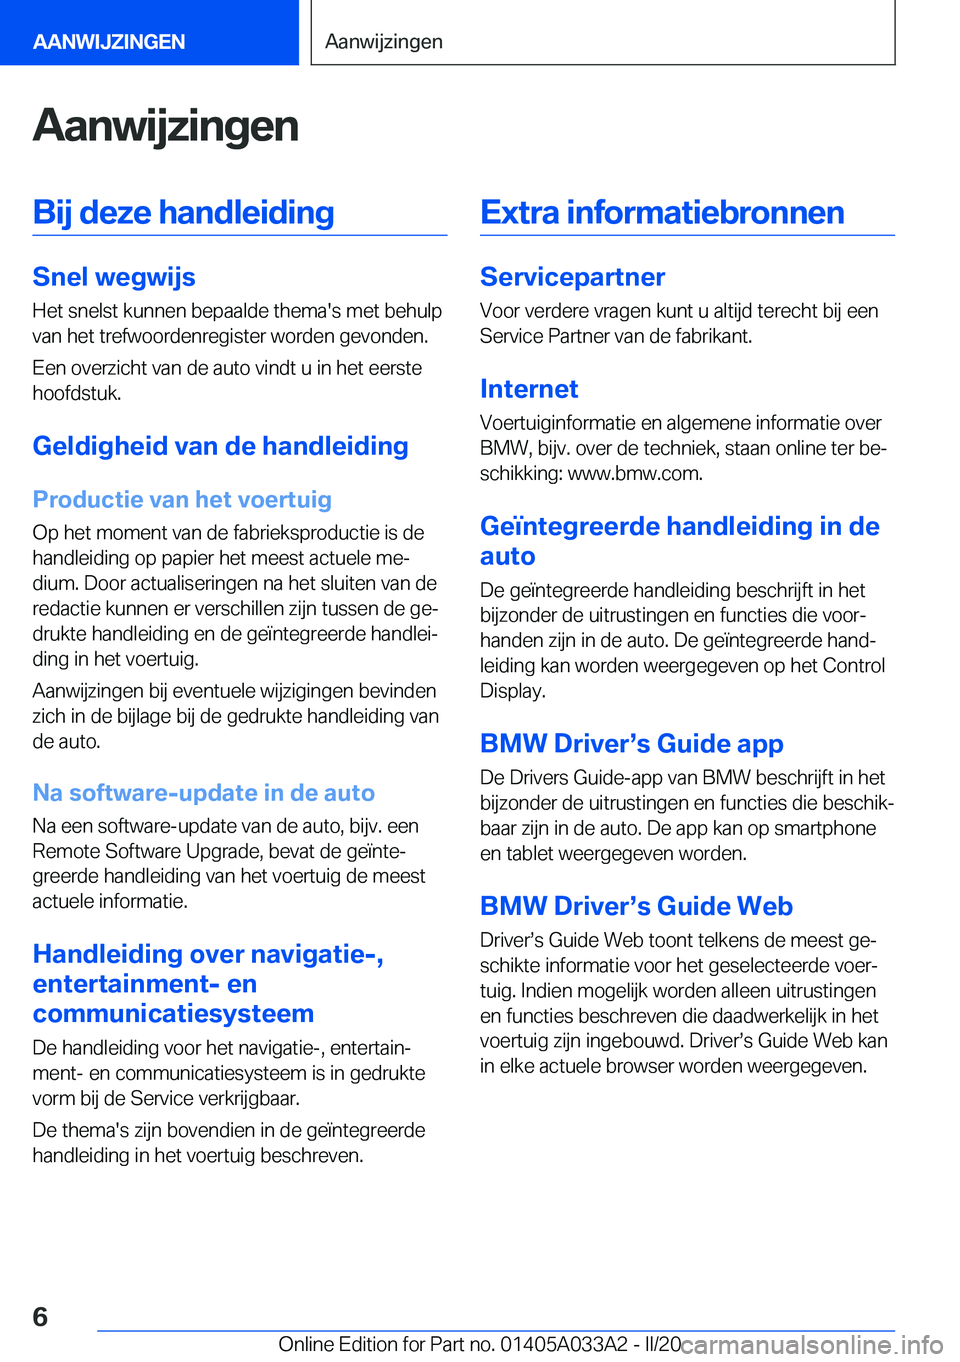 BMW M8 GRAN COUPE 2020  Instructieboekjes (in Dutch) �A�a�n�w�i�j�z�i�n�g�e�n�B�i�j��d�e�z�e��h�a�n�d�l�e�i�d�i�n�g
�S�n�e�l��w�e�g�w�i�j�s
�H�e�t��s�n�e�l�s�t��k�u�n�n�e�n��b�e�p�a�a�l�d�e��t�h�e�m�a�'�s��m�e�t��b�e�h�u�l�p
�v�a�n��h�e�t�